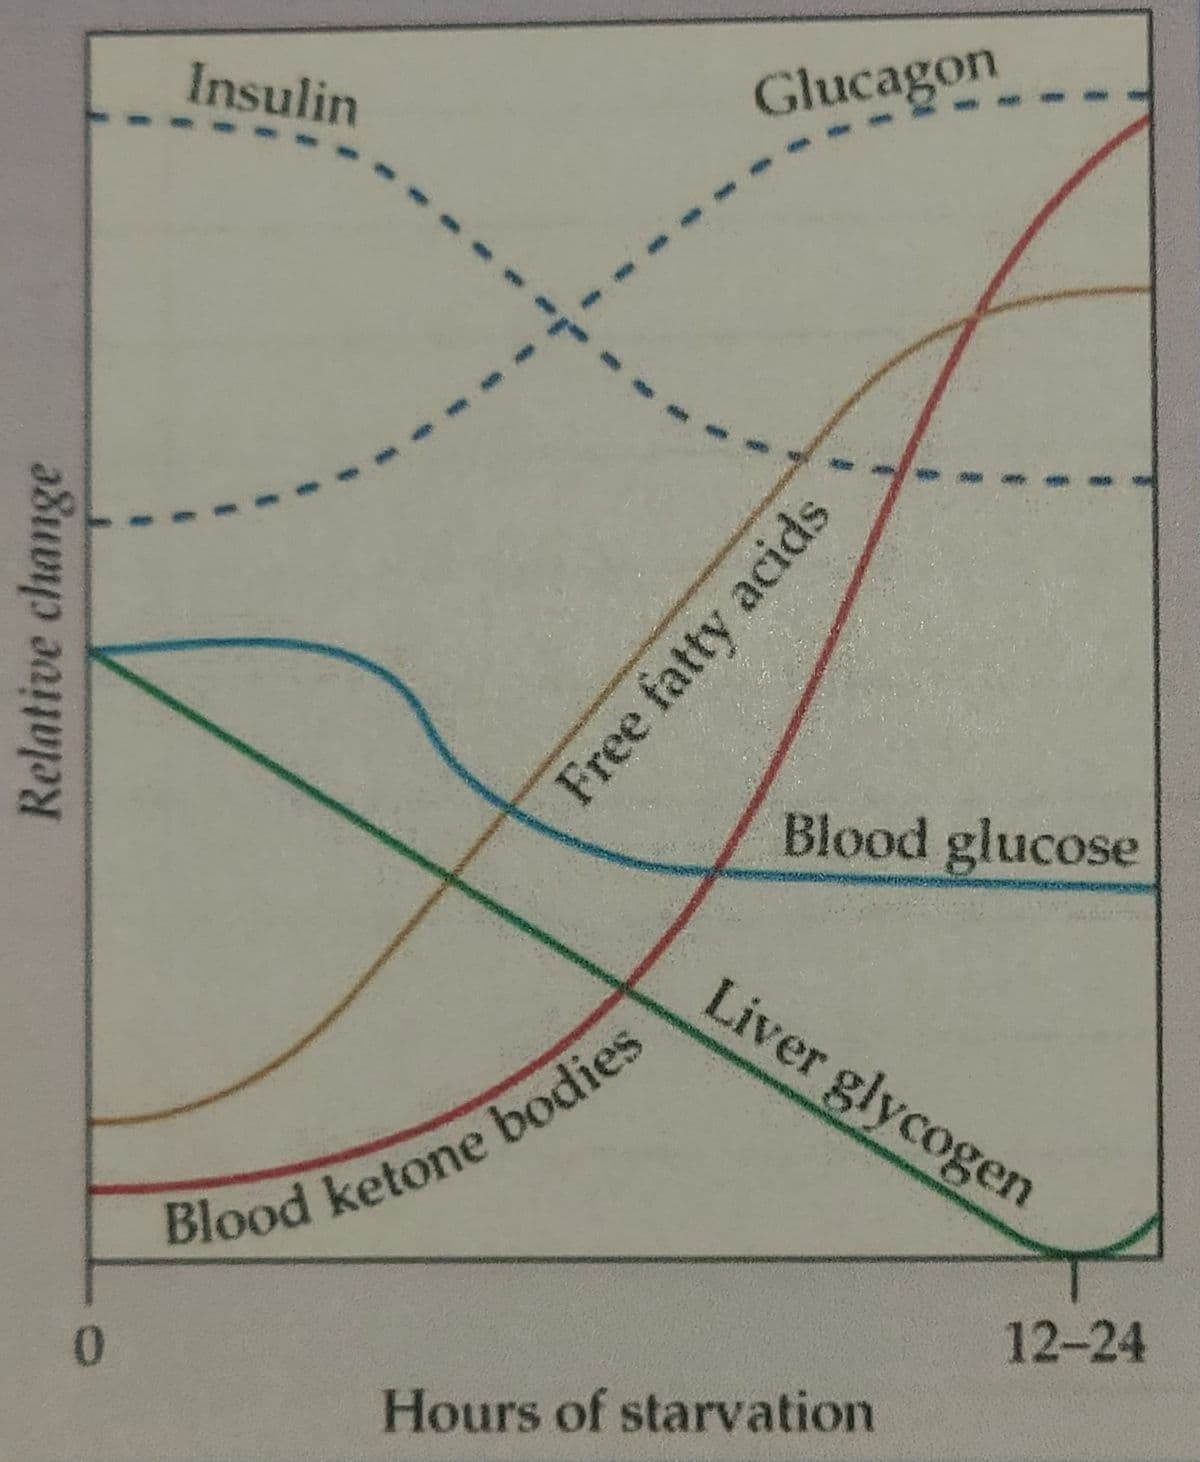 Insulin
Glucagon
Blood glucose
Liver glycogen
12-24
Hours of starvation
Relative change
Free fatty acids
